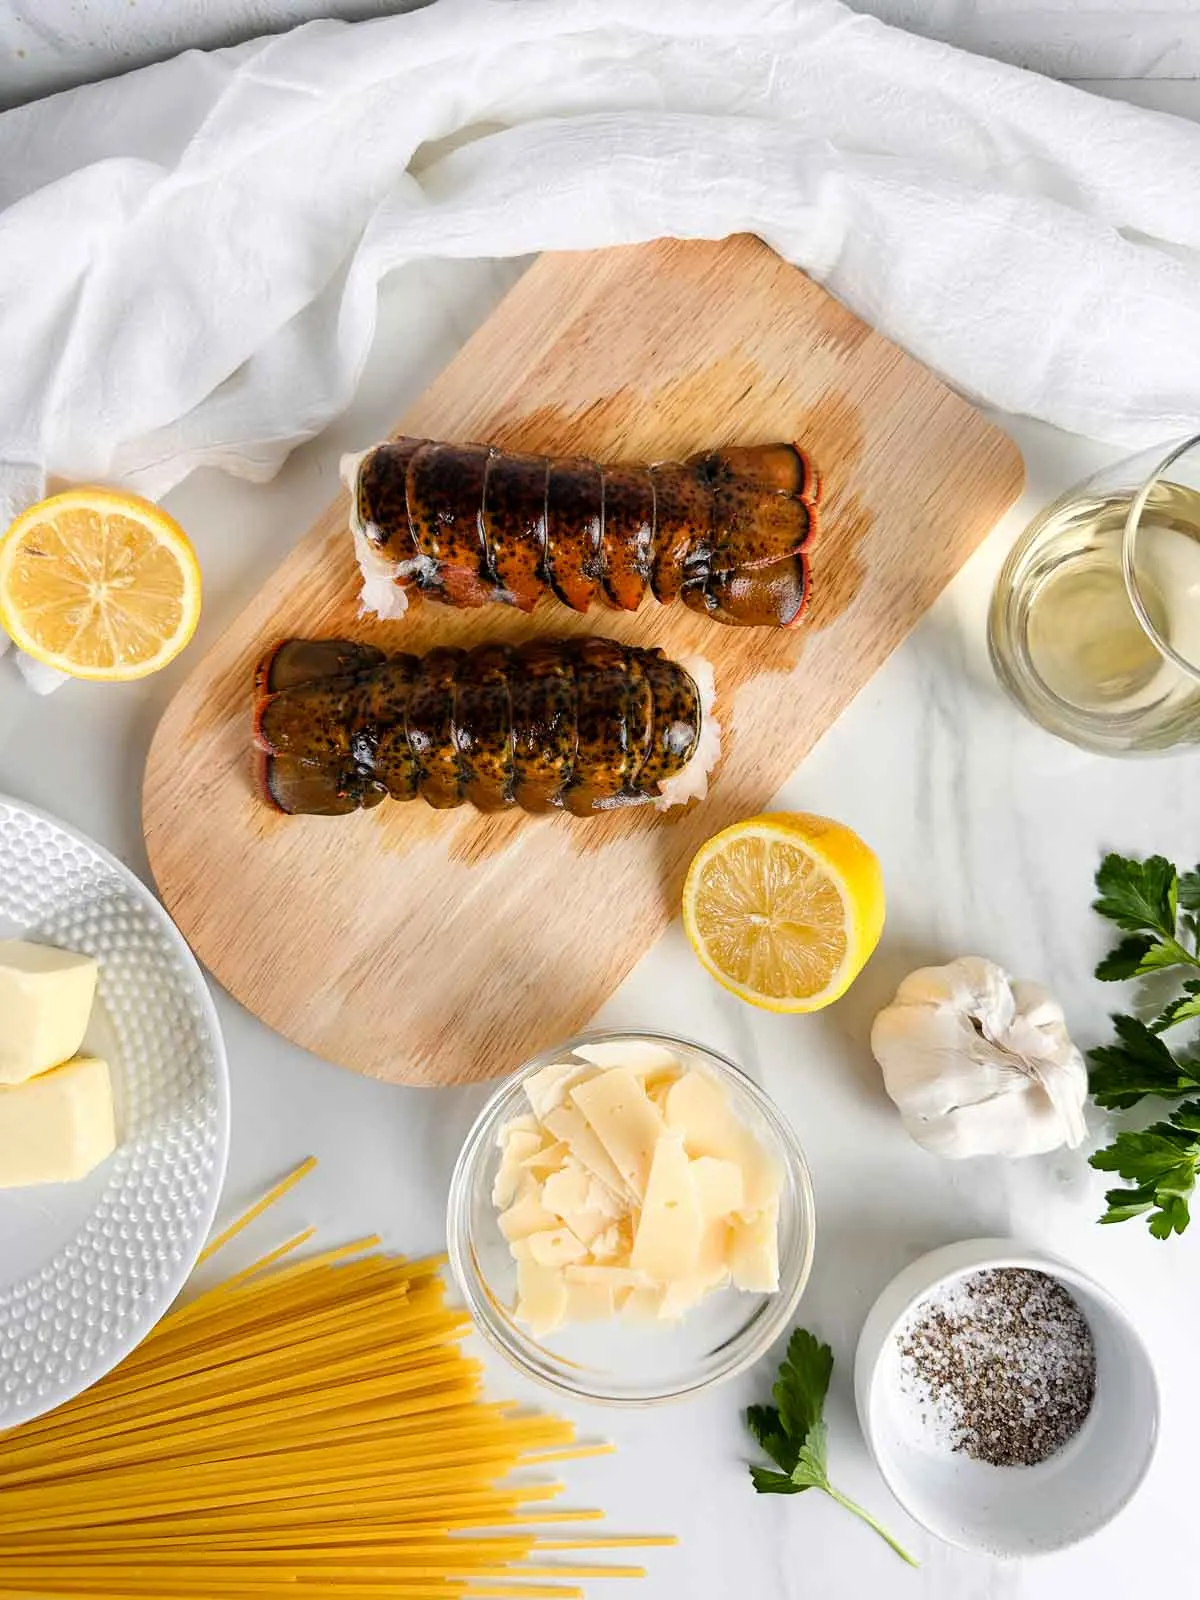 Ingredients for Lobster Scampi Linguine: Lobster Tails, White Wine, Garlic, Parmesan Cheese, Butter, Lemon, Salt and Pepper, and Linguine